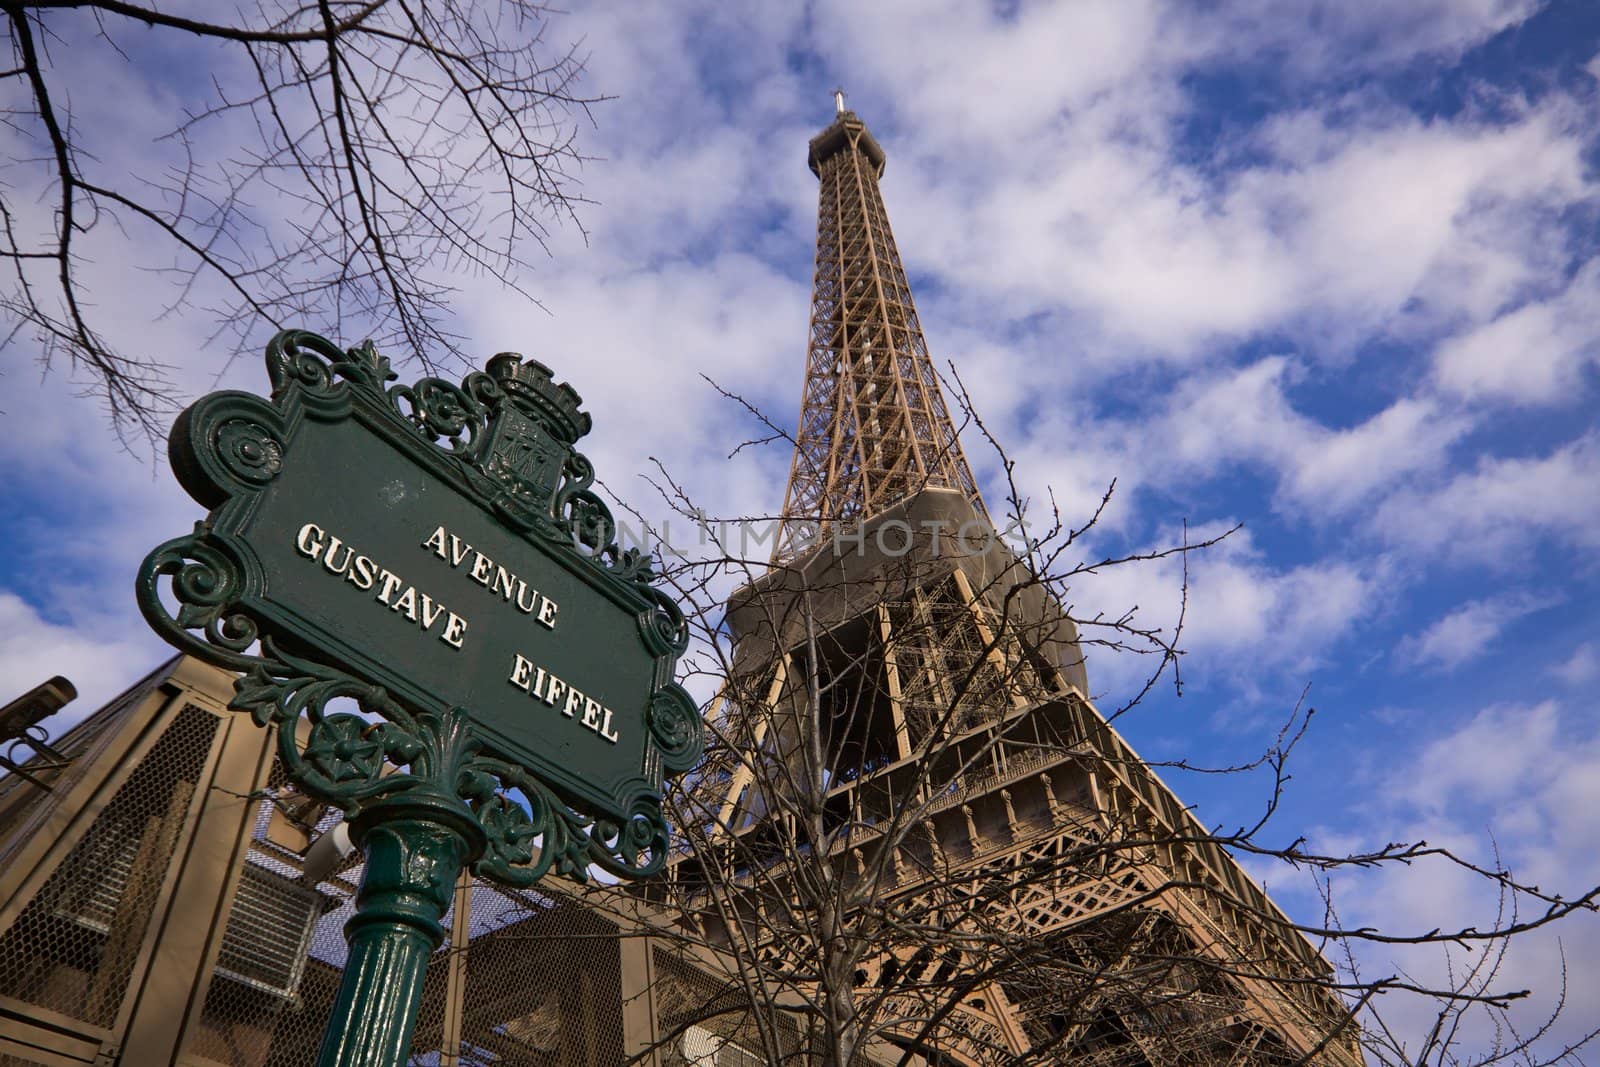 Gustave Eiffel avenue by Harvepino